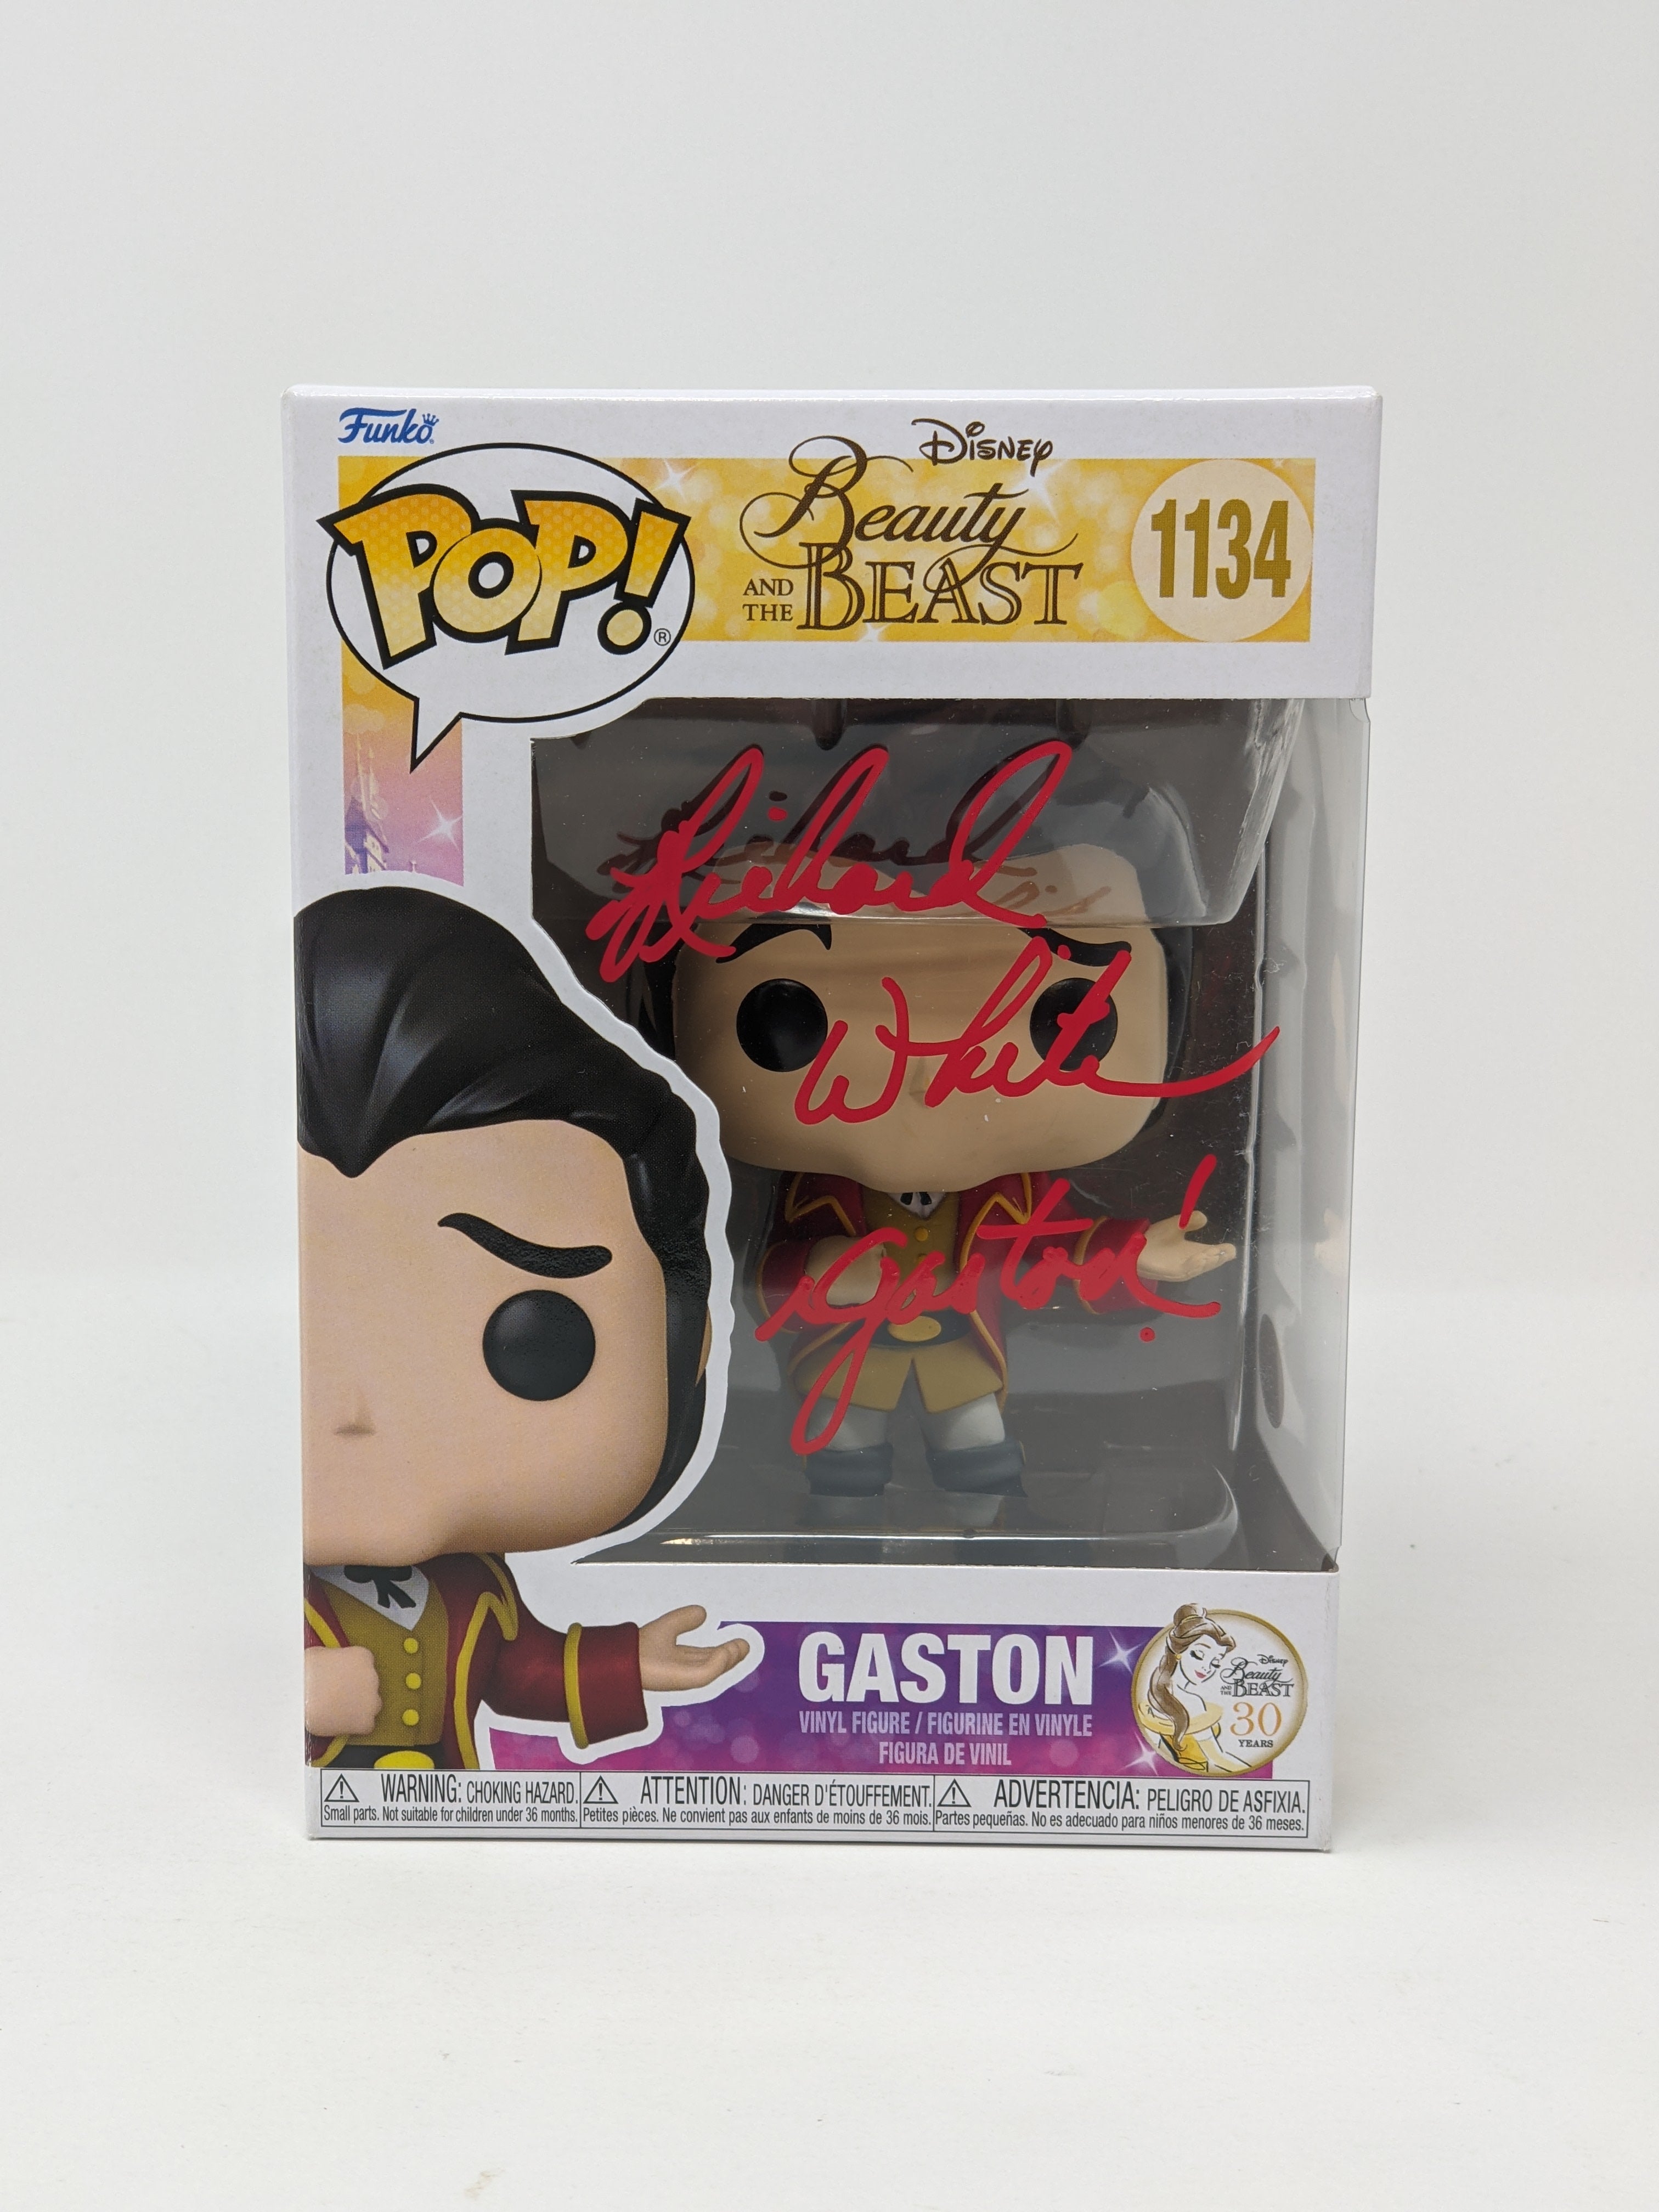 Richard White Disney Beauty and the Beast Gaston #1134 Signed Funko Pop JSA Certified Autograph